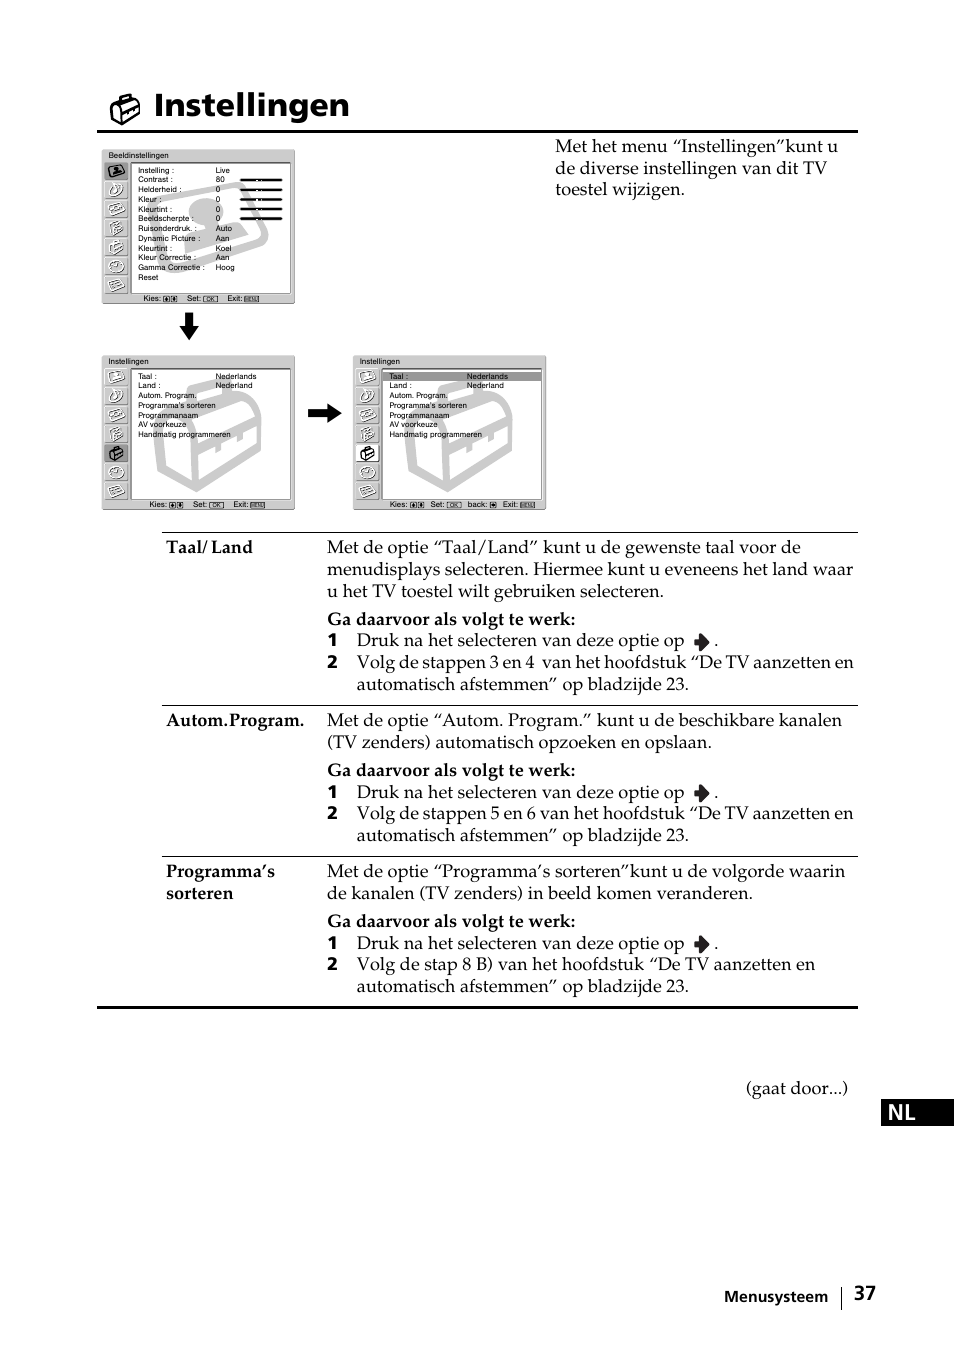 Instellingen, Gaat door...) | Sony KE-42MR1 Manuale d'uso | Pagina 113 / 302